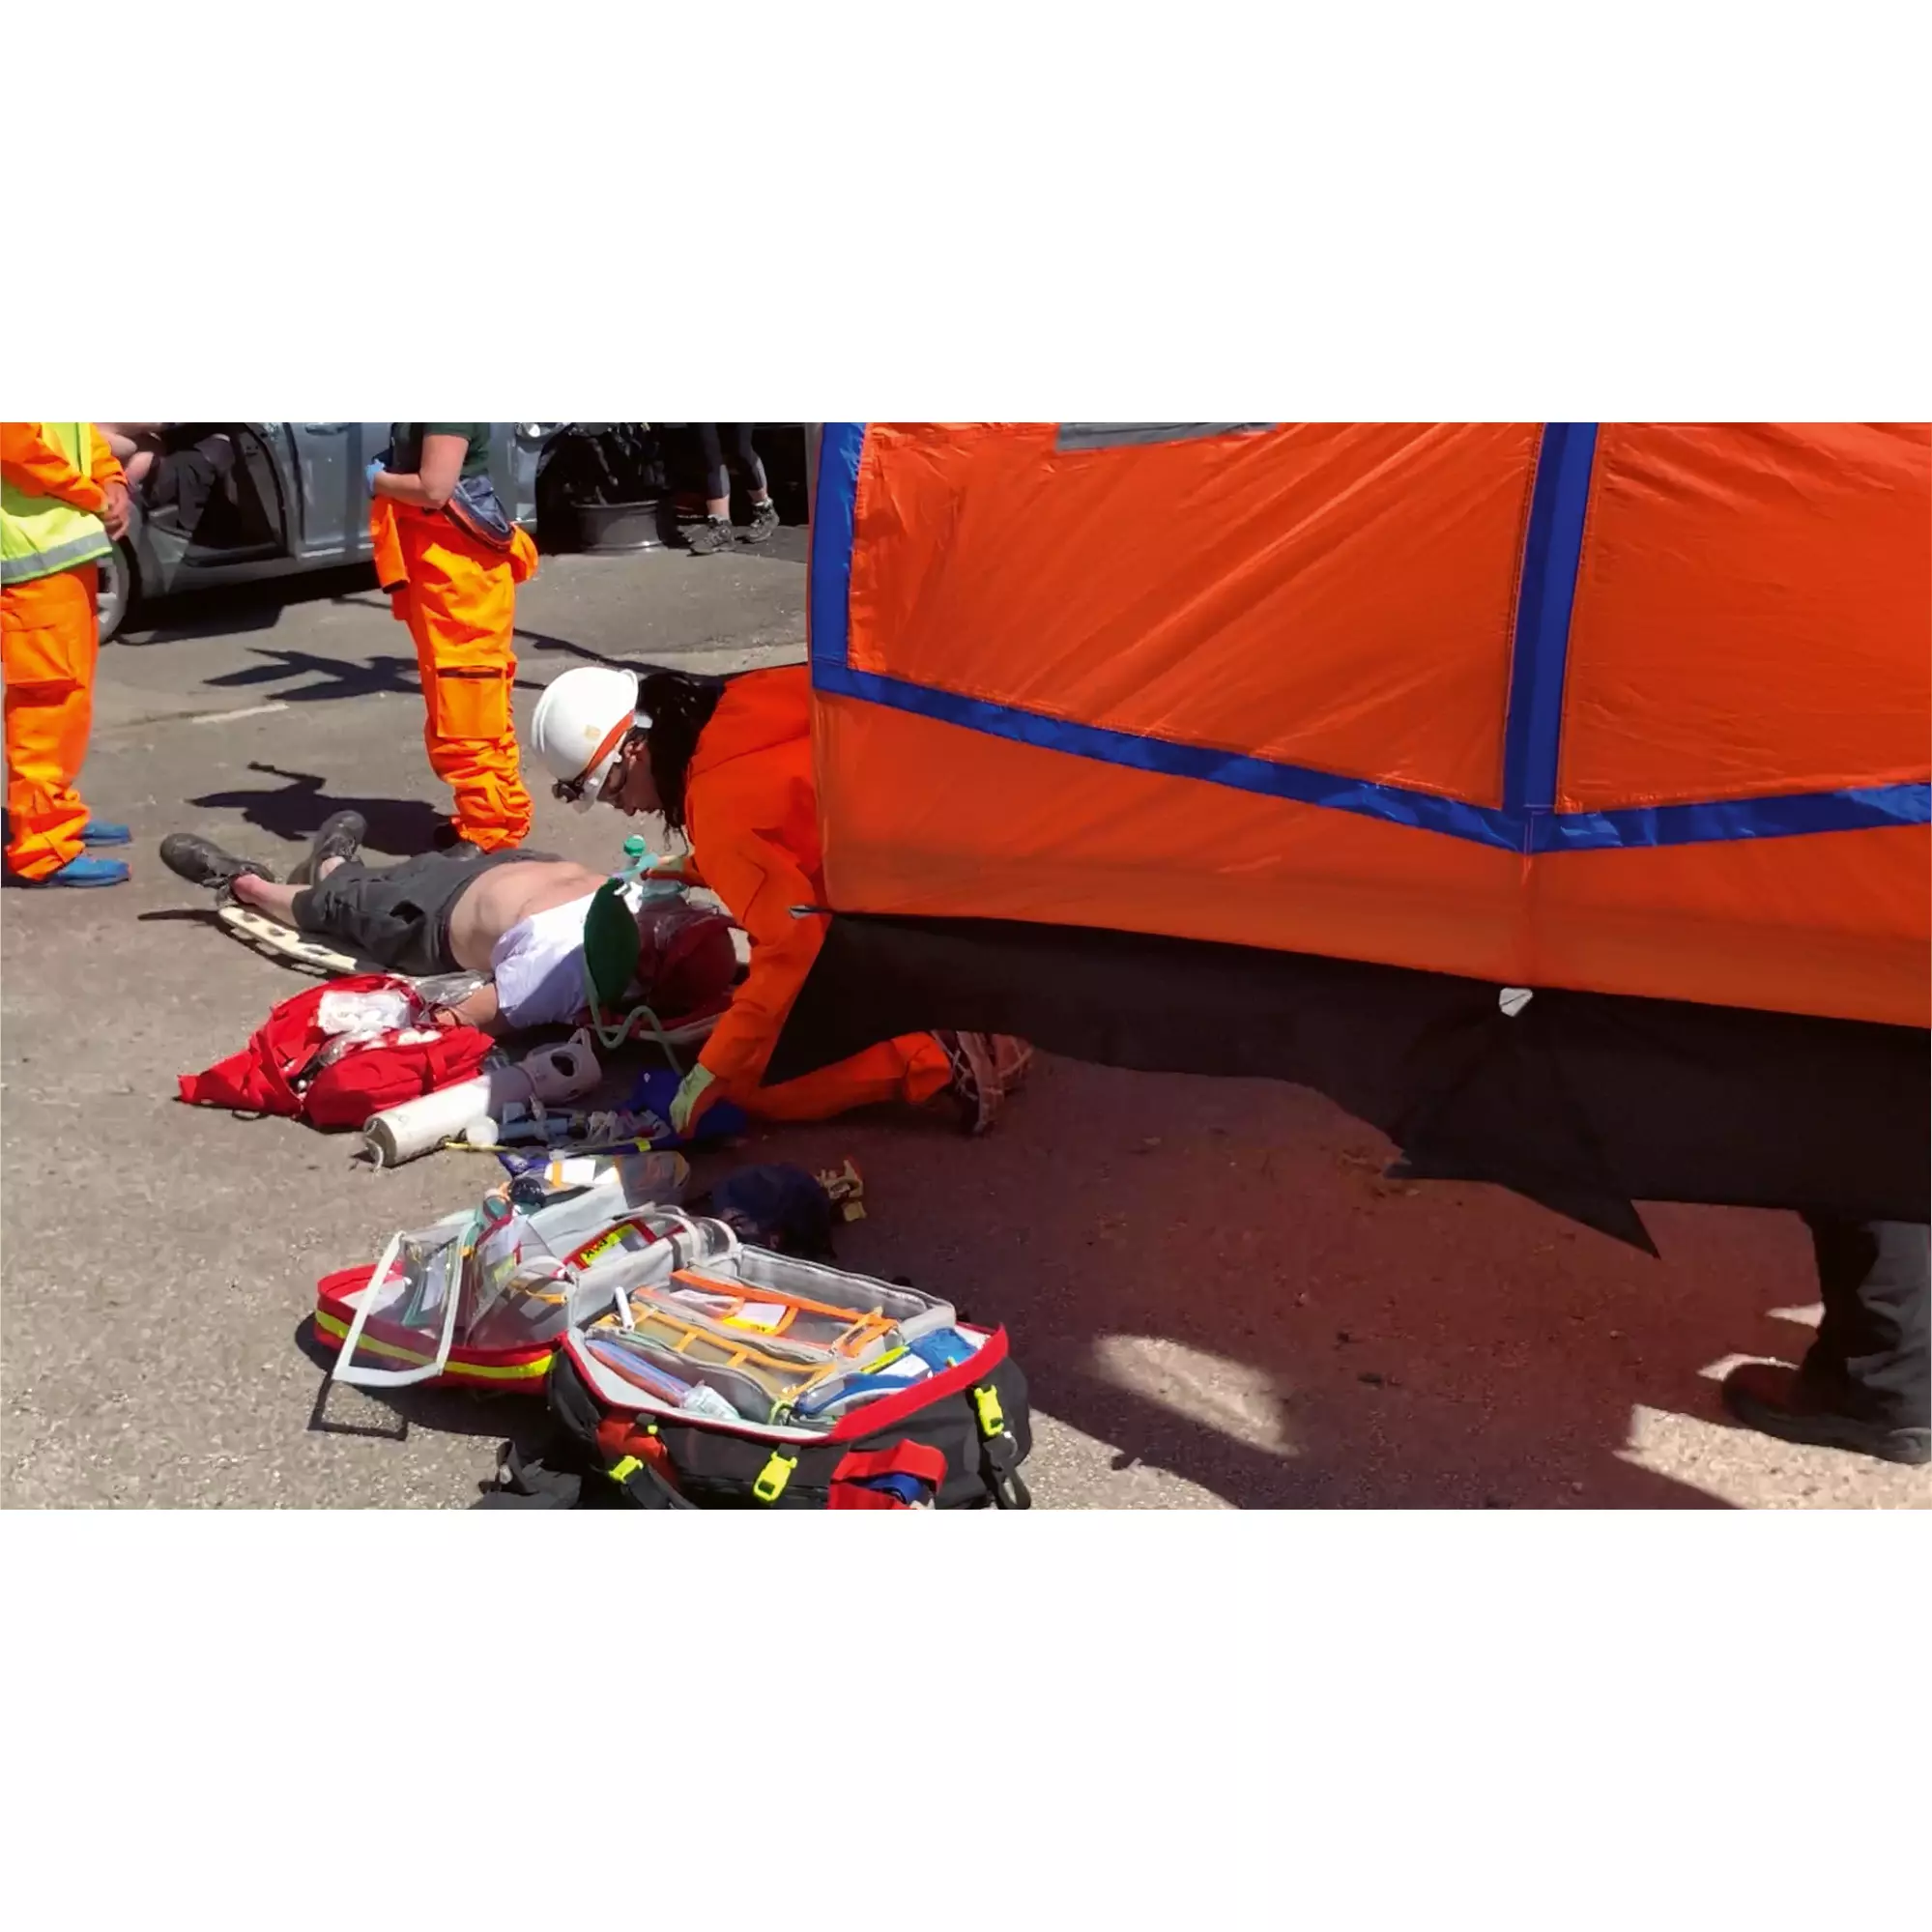 RIGLOO Rescuer rescue tent